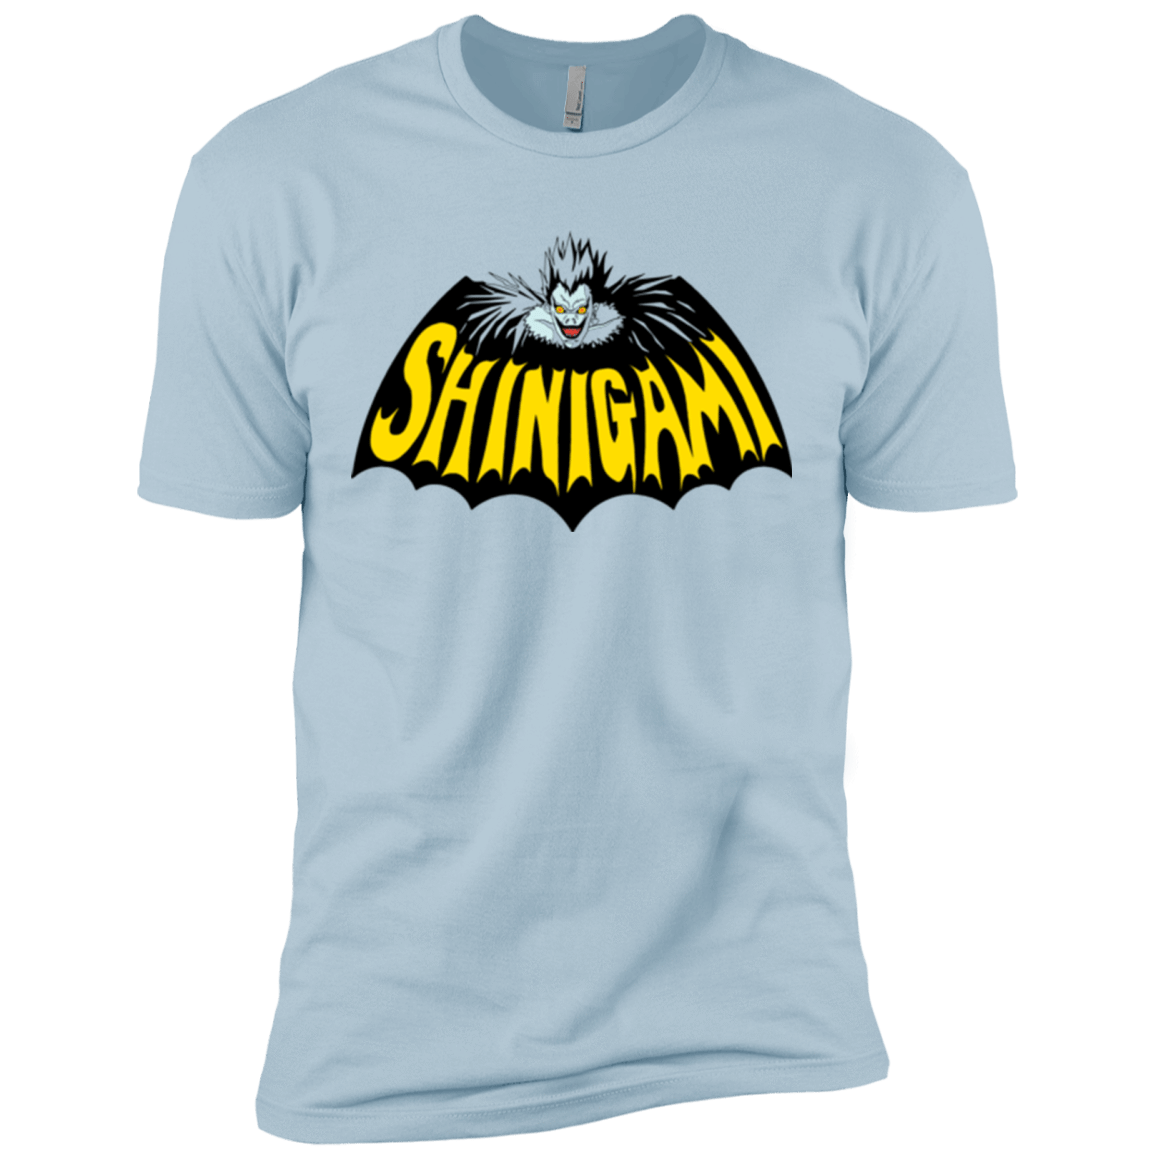 T-Shirts Light Blue / X-Small Bat Shinigami Men's Premium T-Shirt